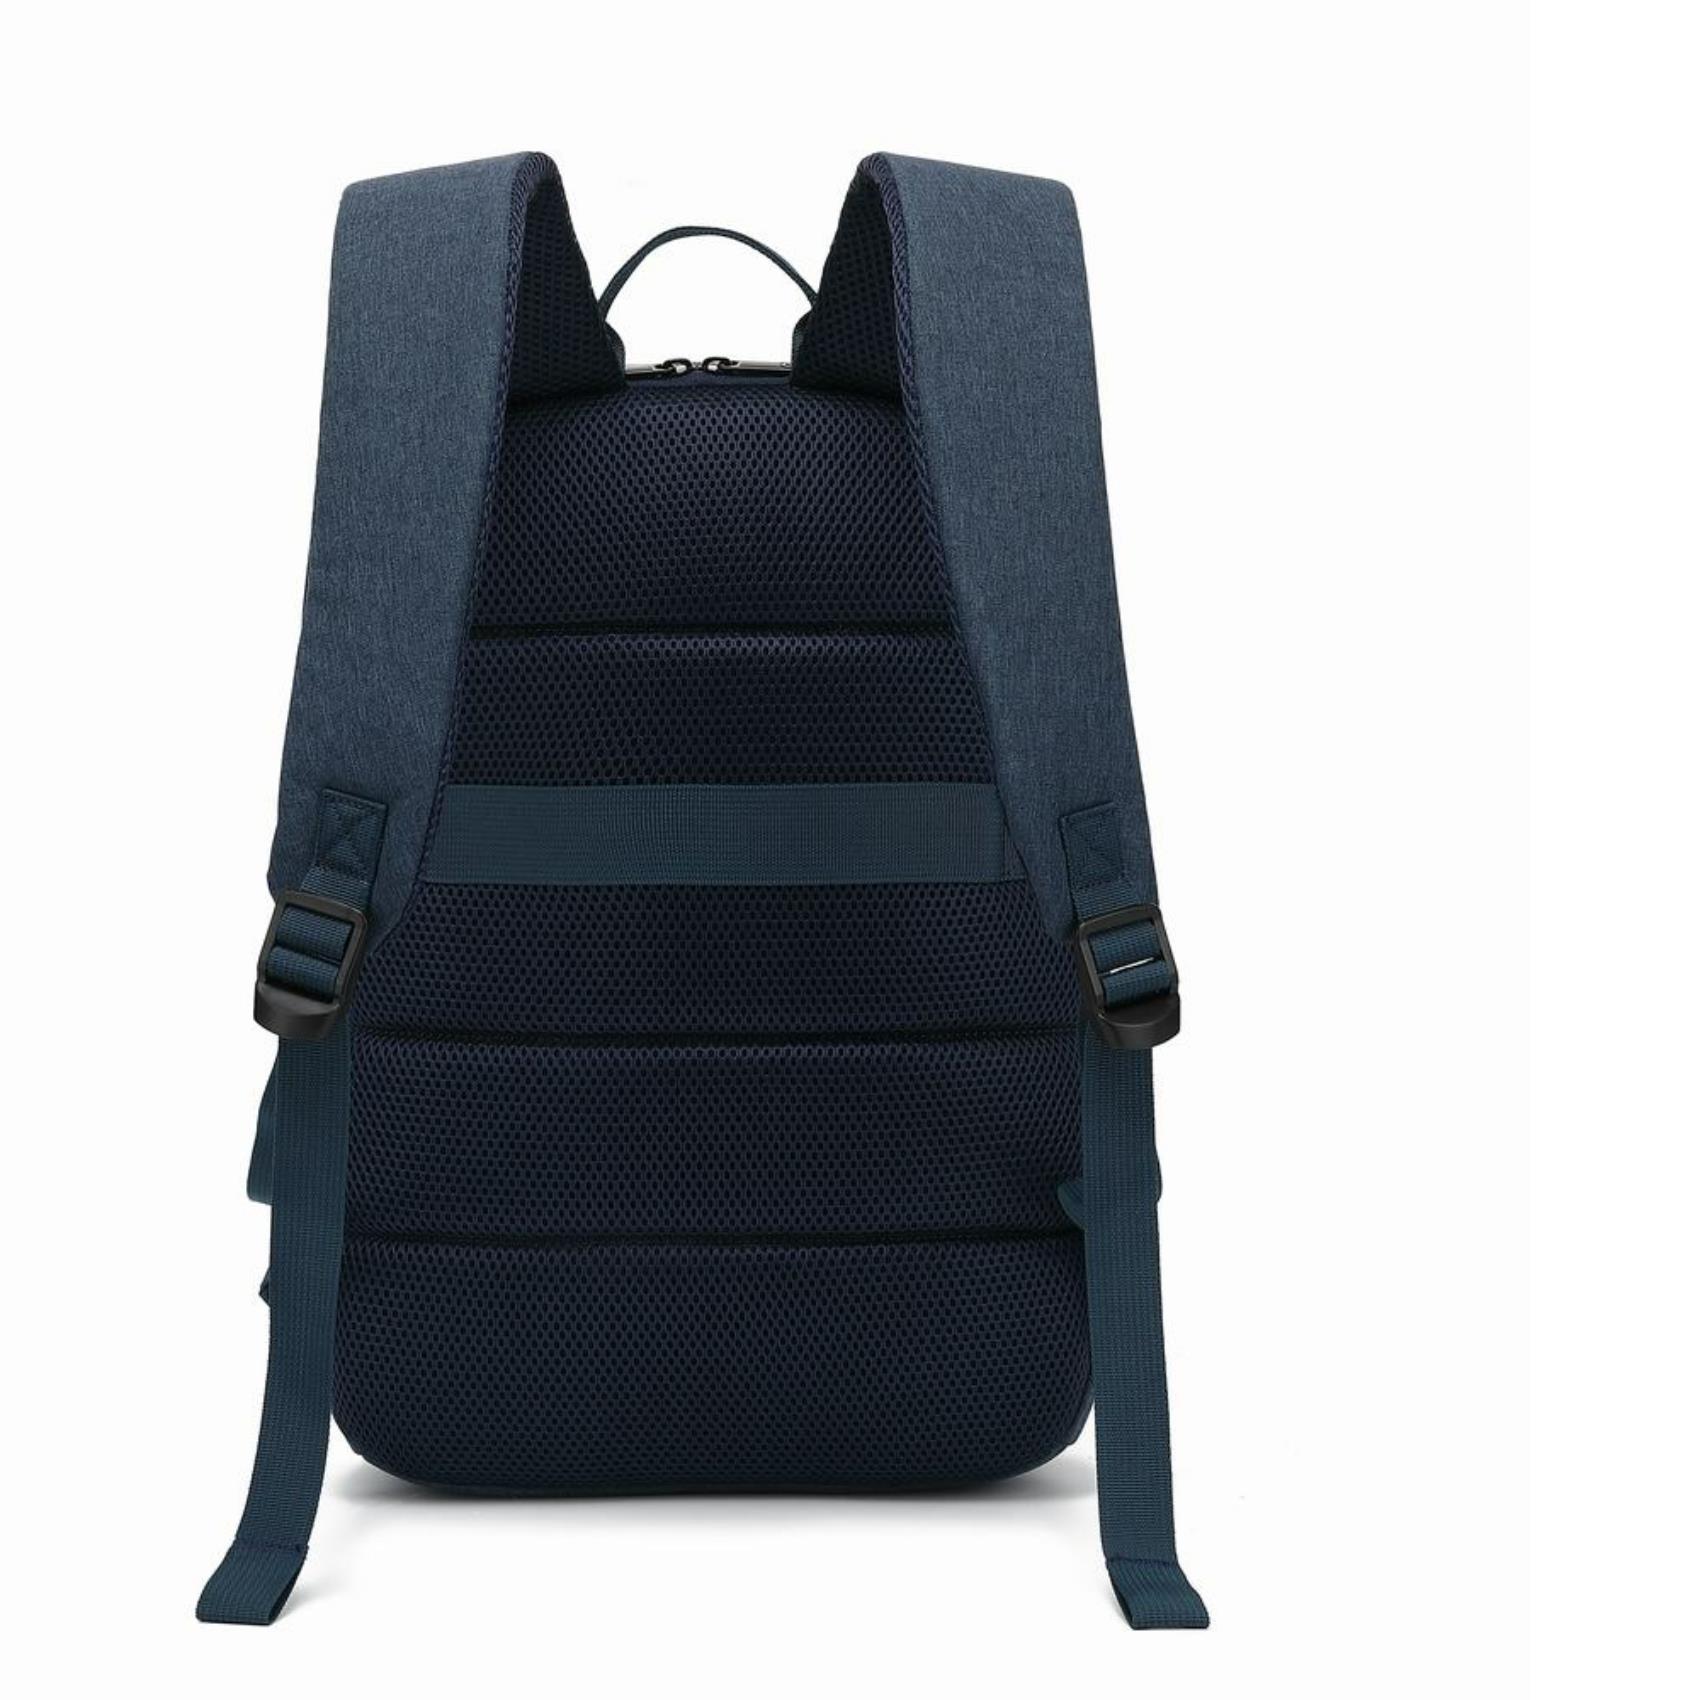 Backpack For Travel Blue Celly Daypackbl 8021735198178